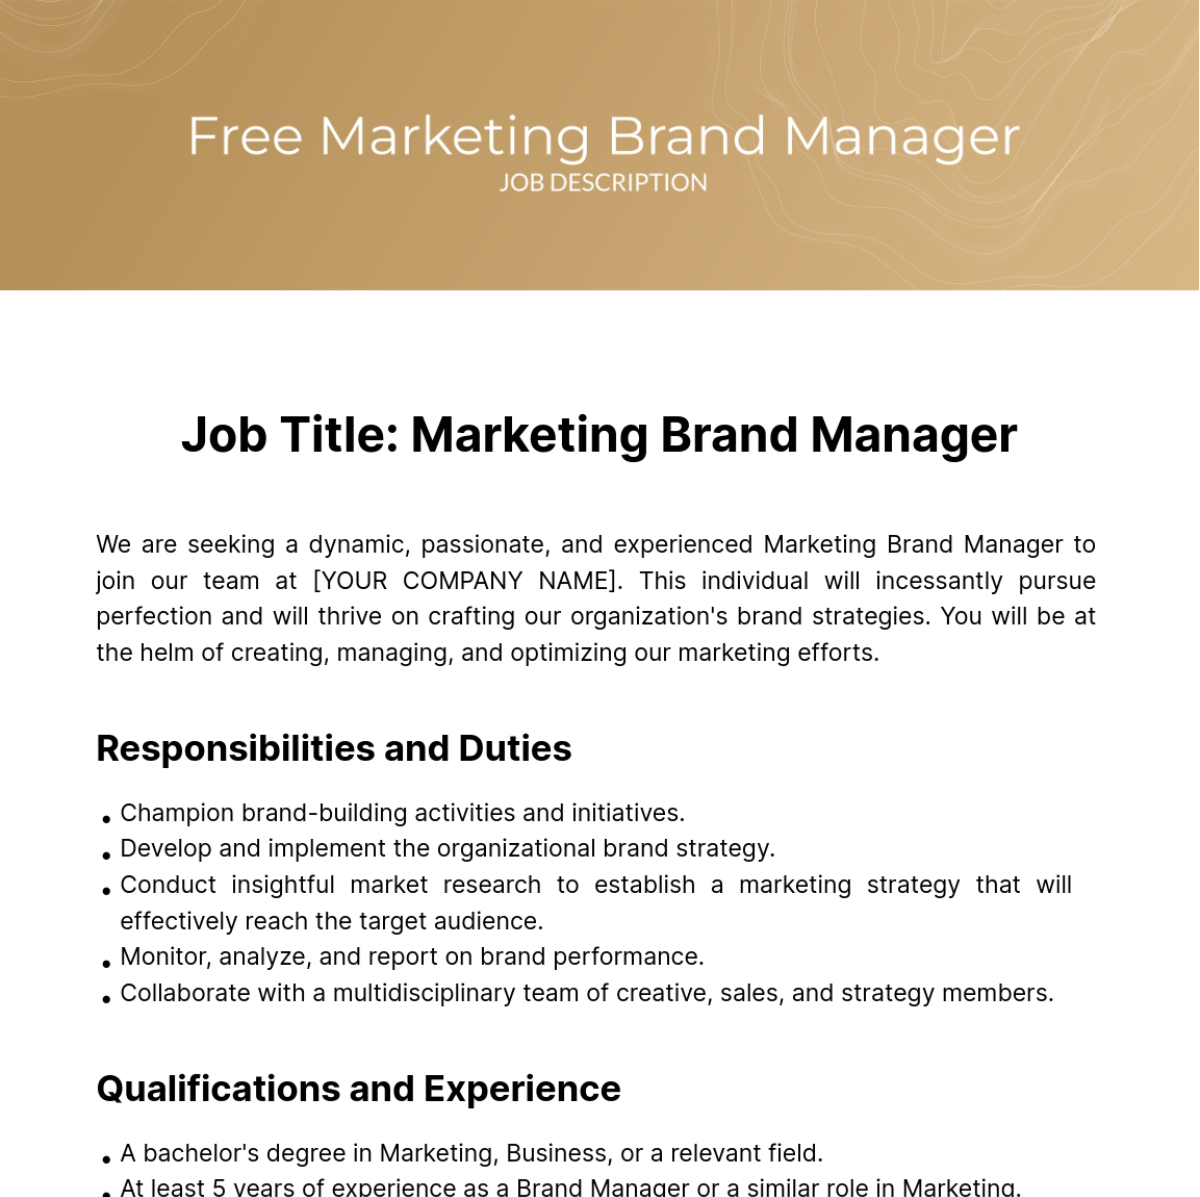 Free Marketing Brand Manager Job Description Template